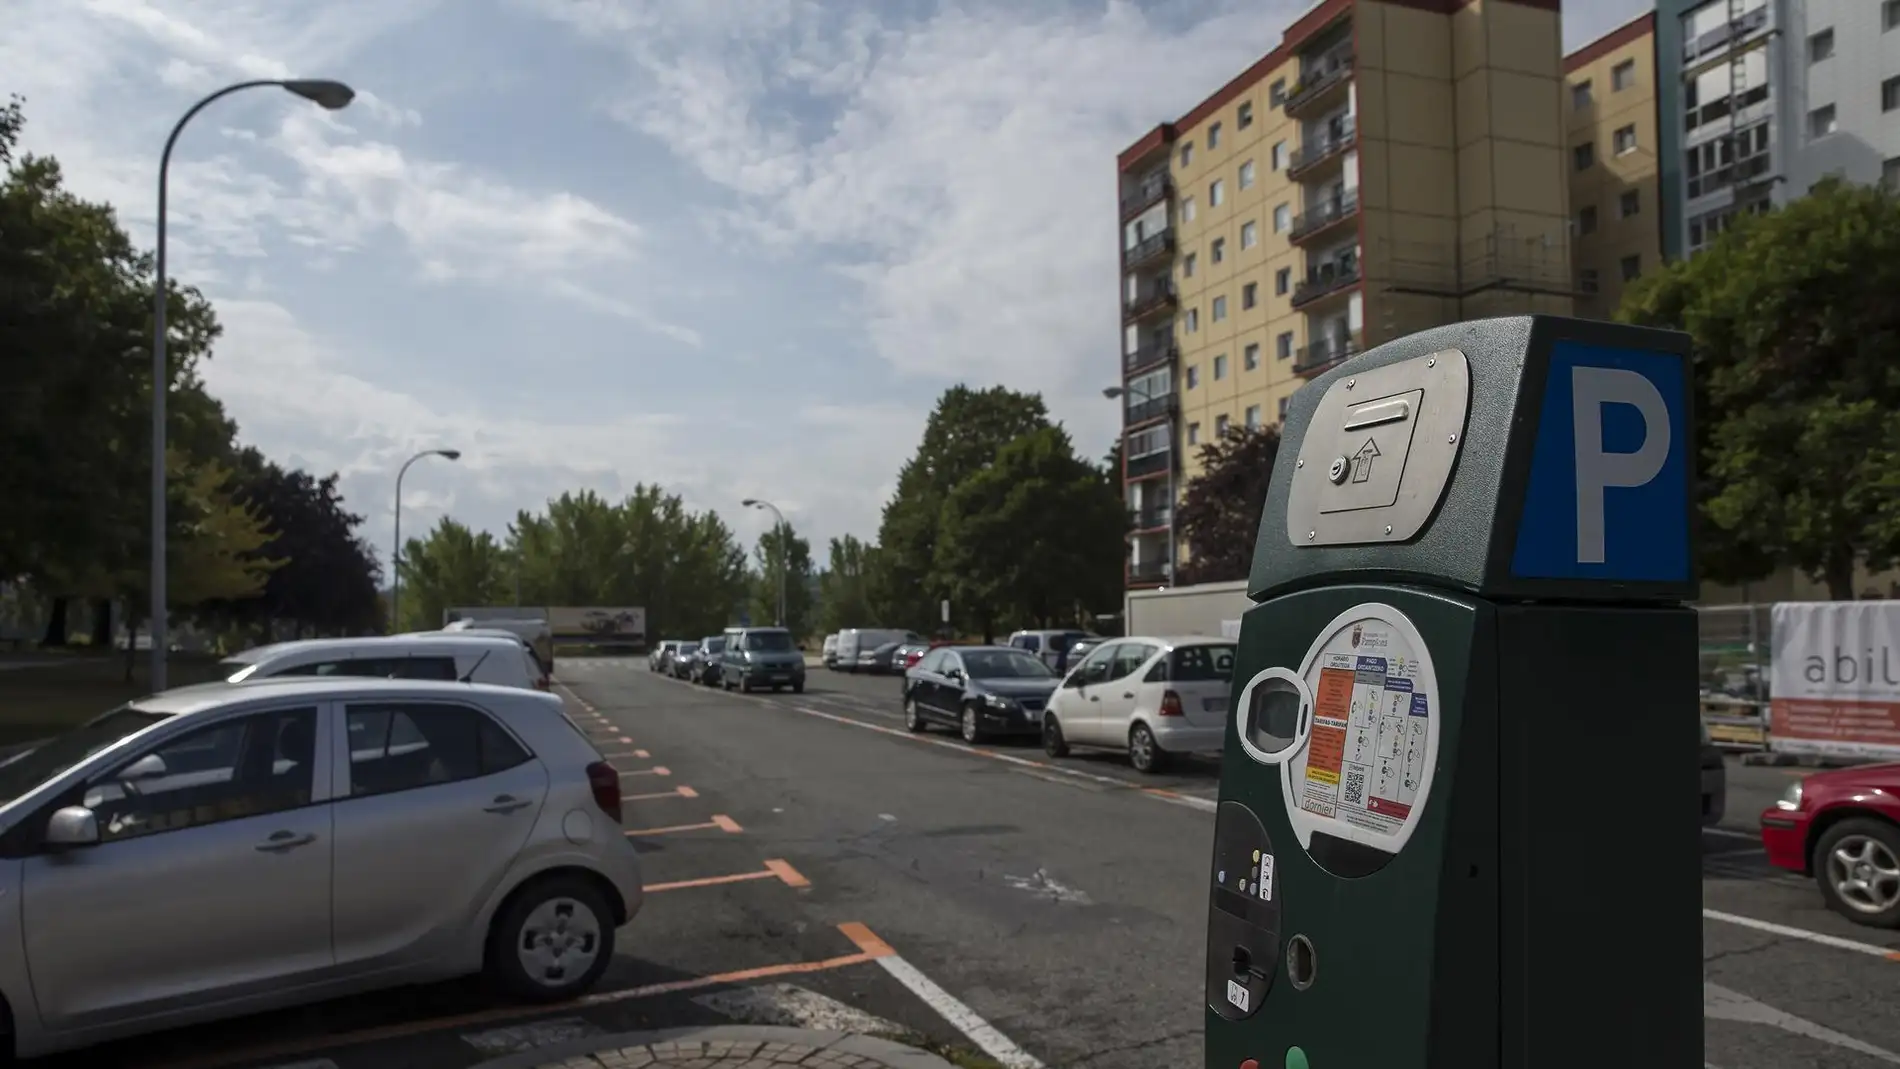 Zona naranja de aparcamiento en Pamplona